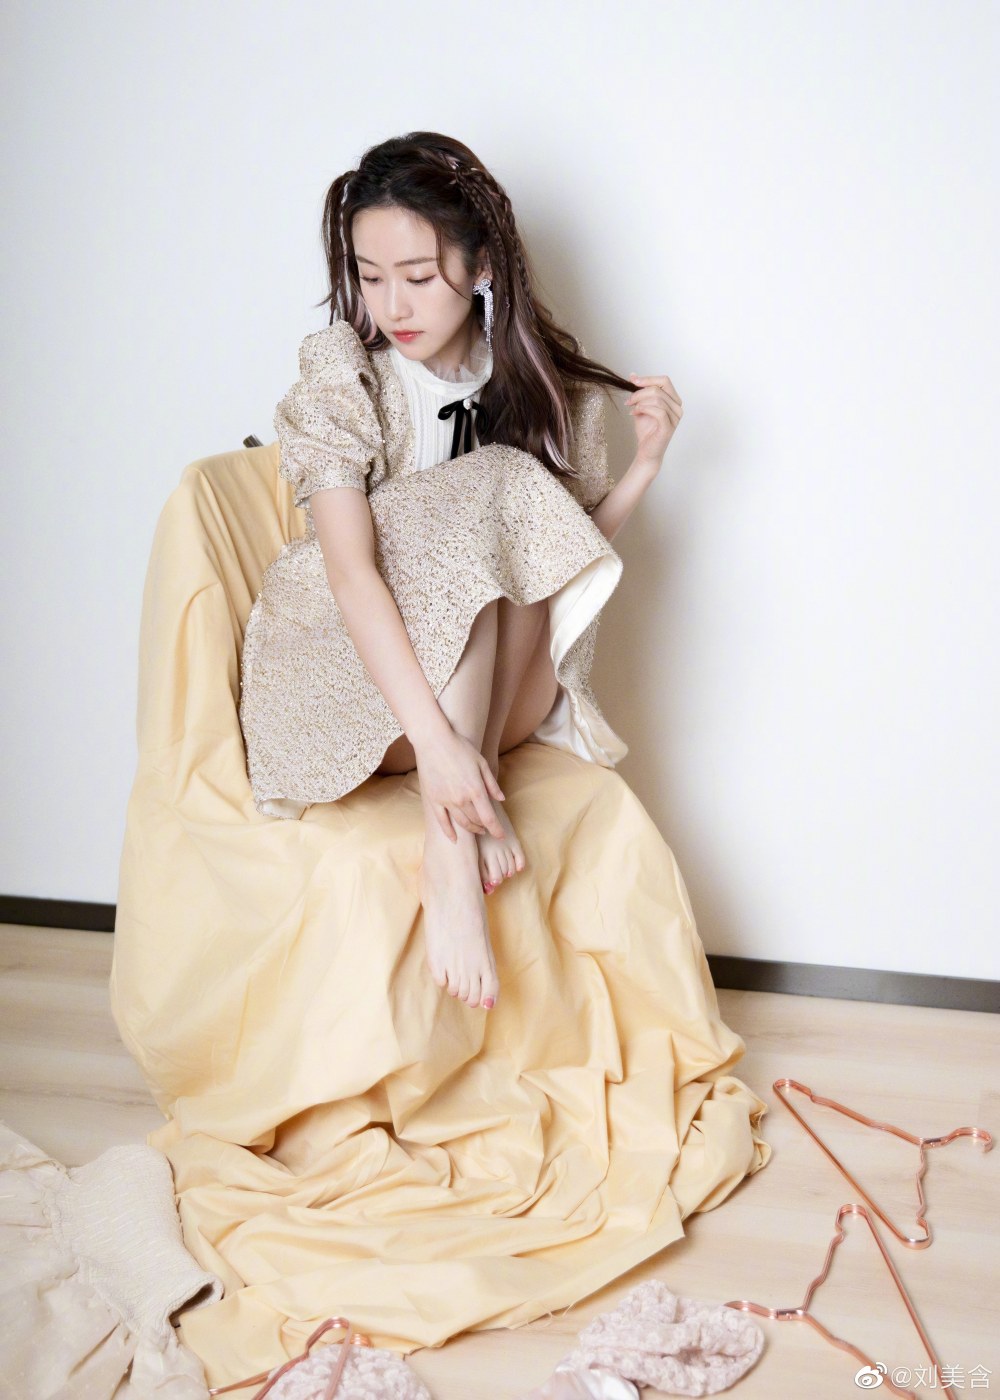 Meihan Liu Sexy and Hottest Photos , Latest Pics